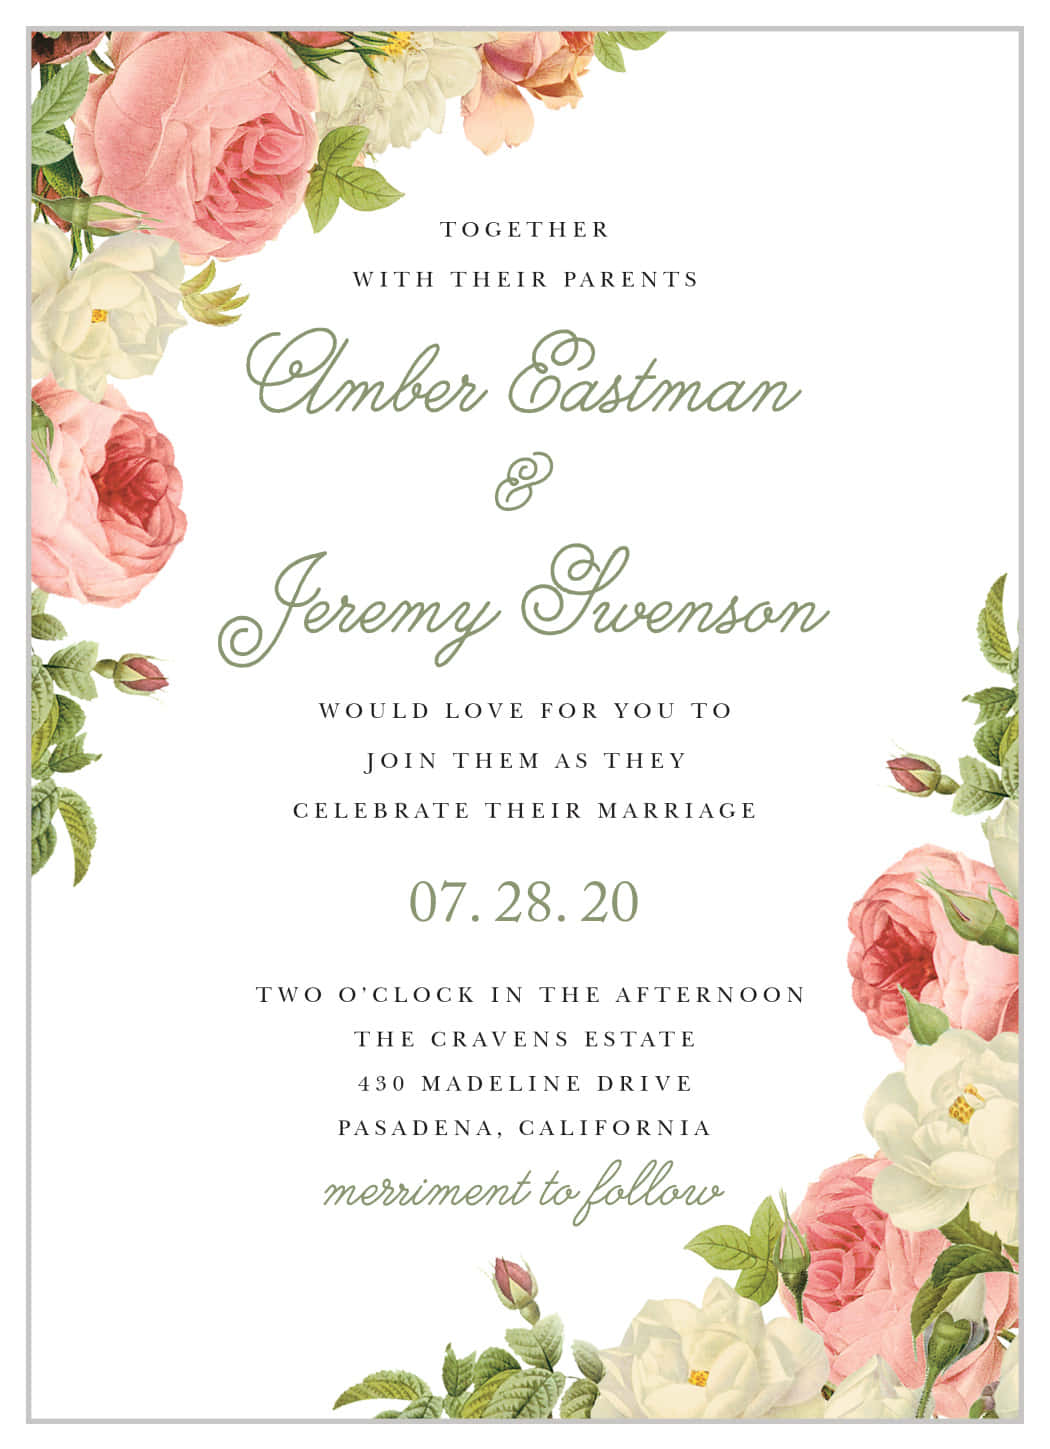 Timeless Elegance - Wedding Invitation Background